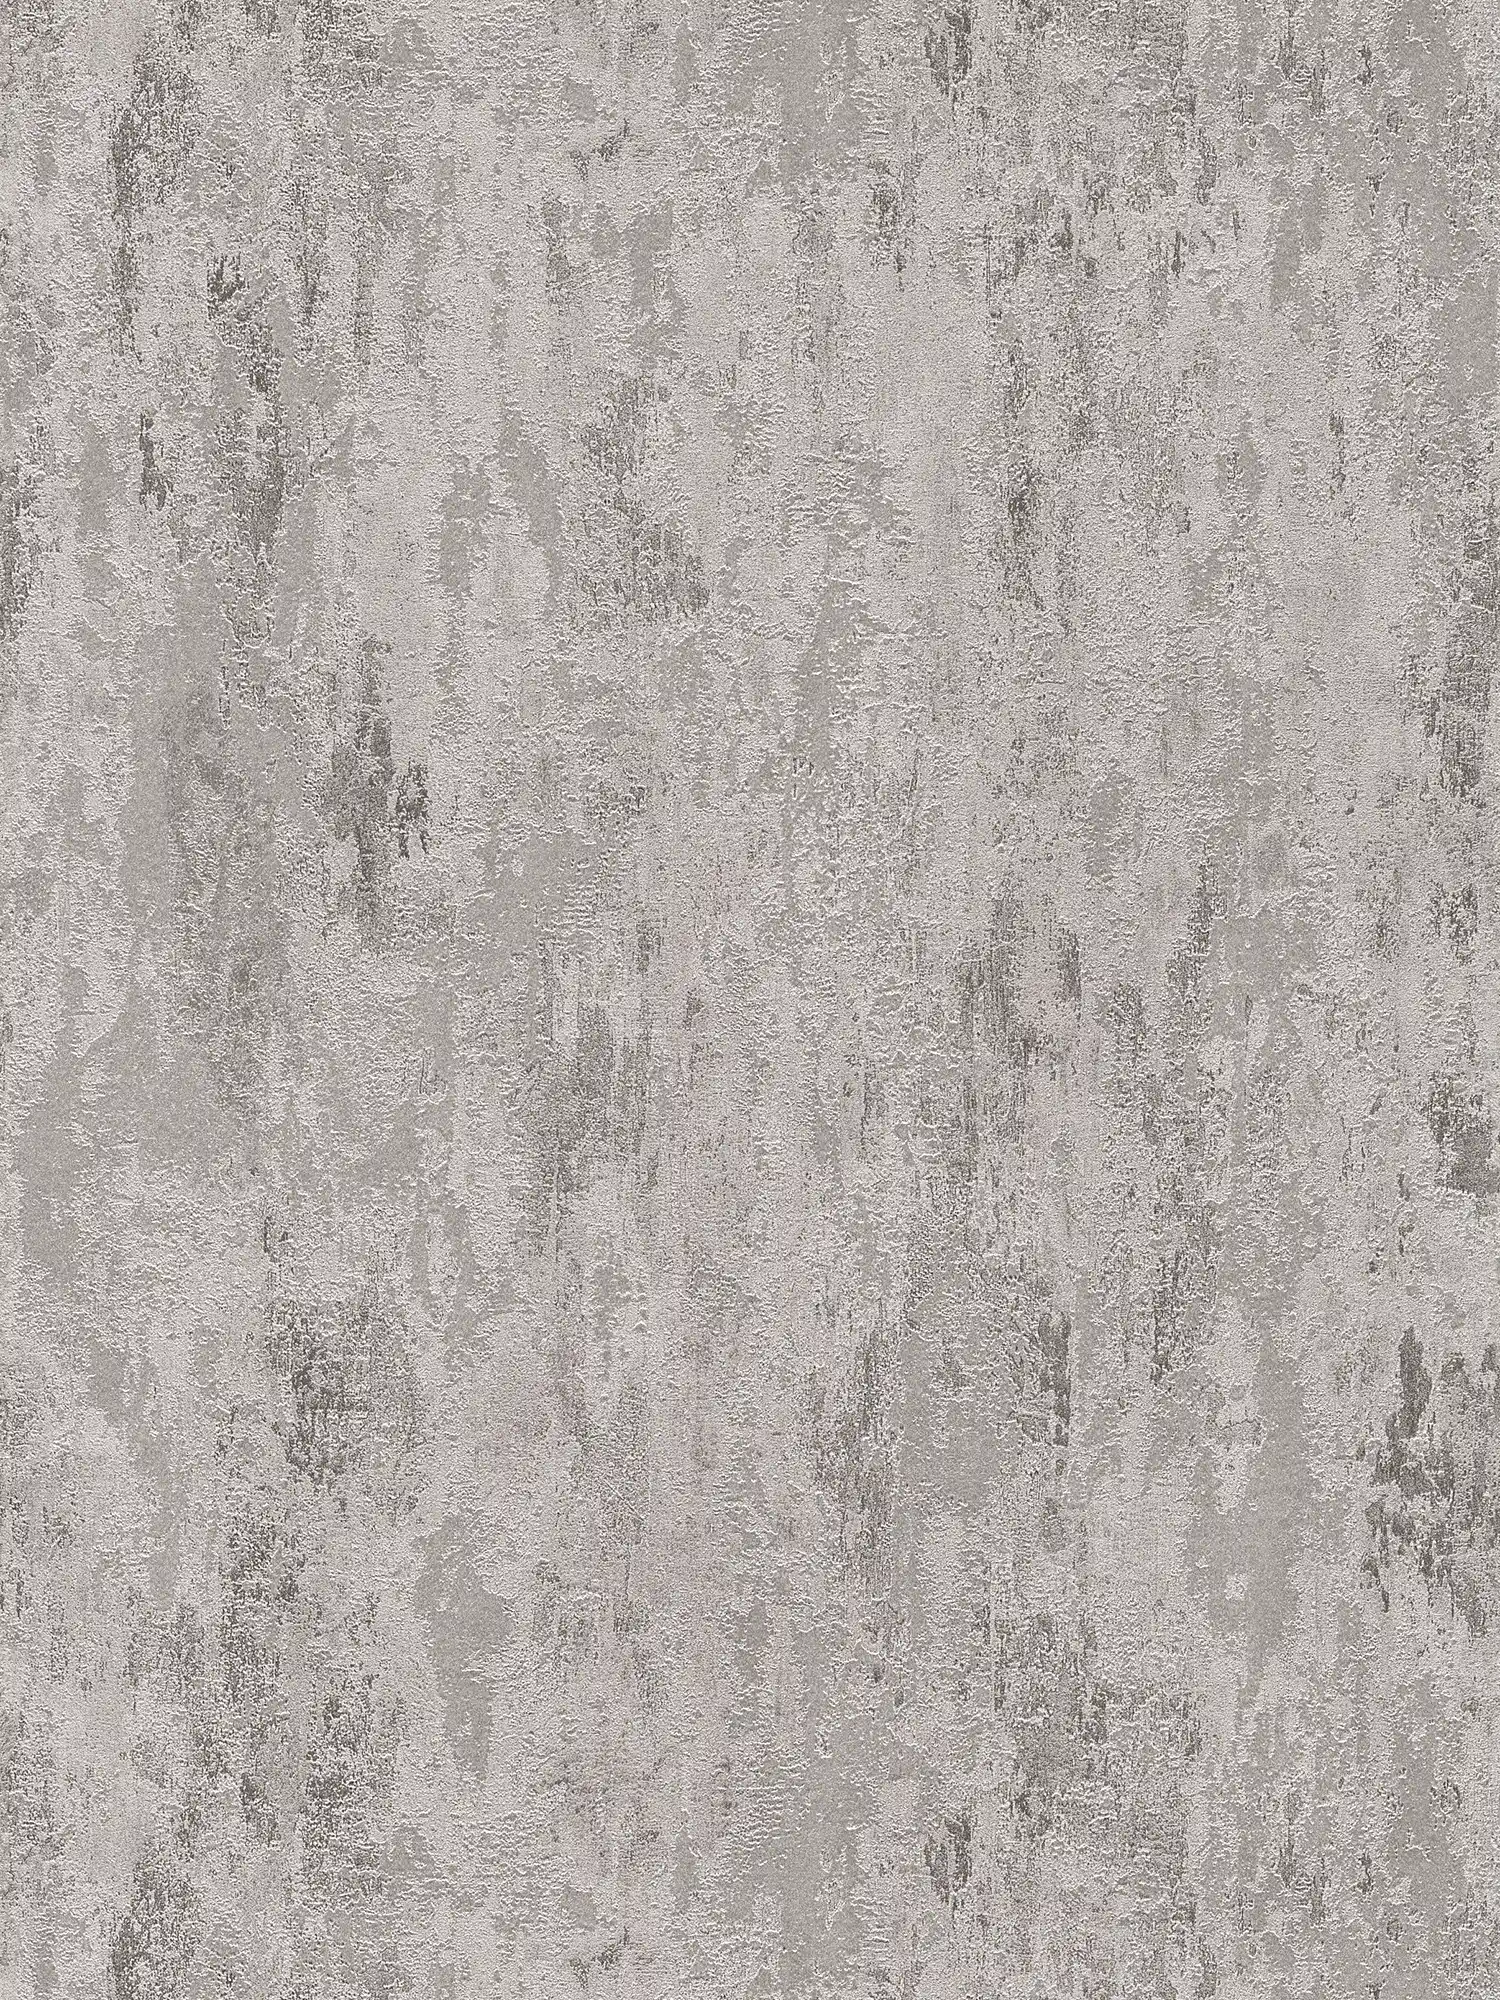         Rost Vliestapete mit Strukturmuster – Grau, Silber
    